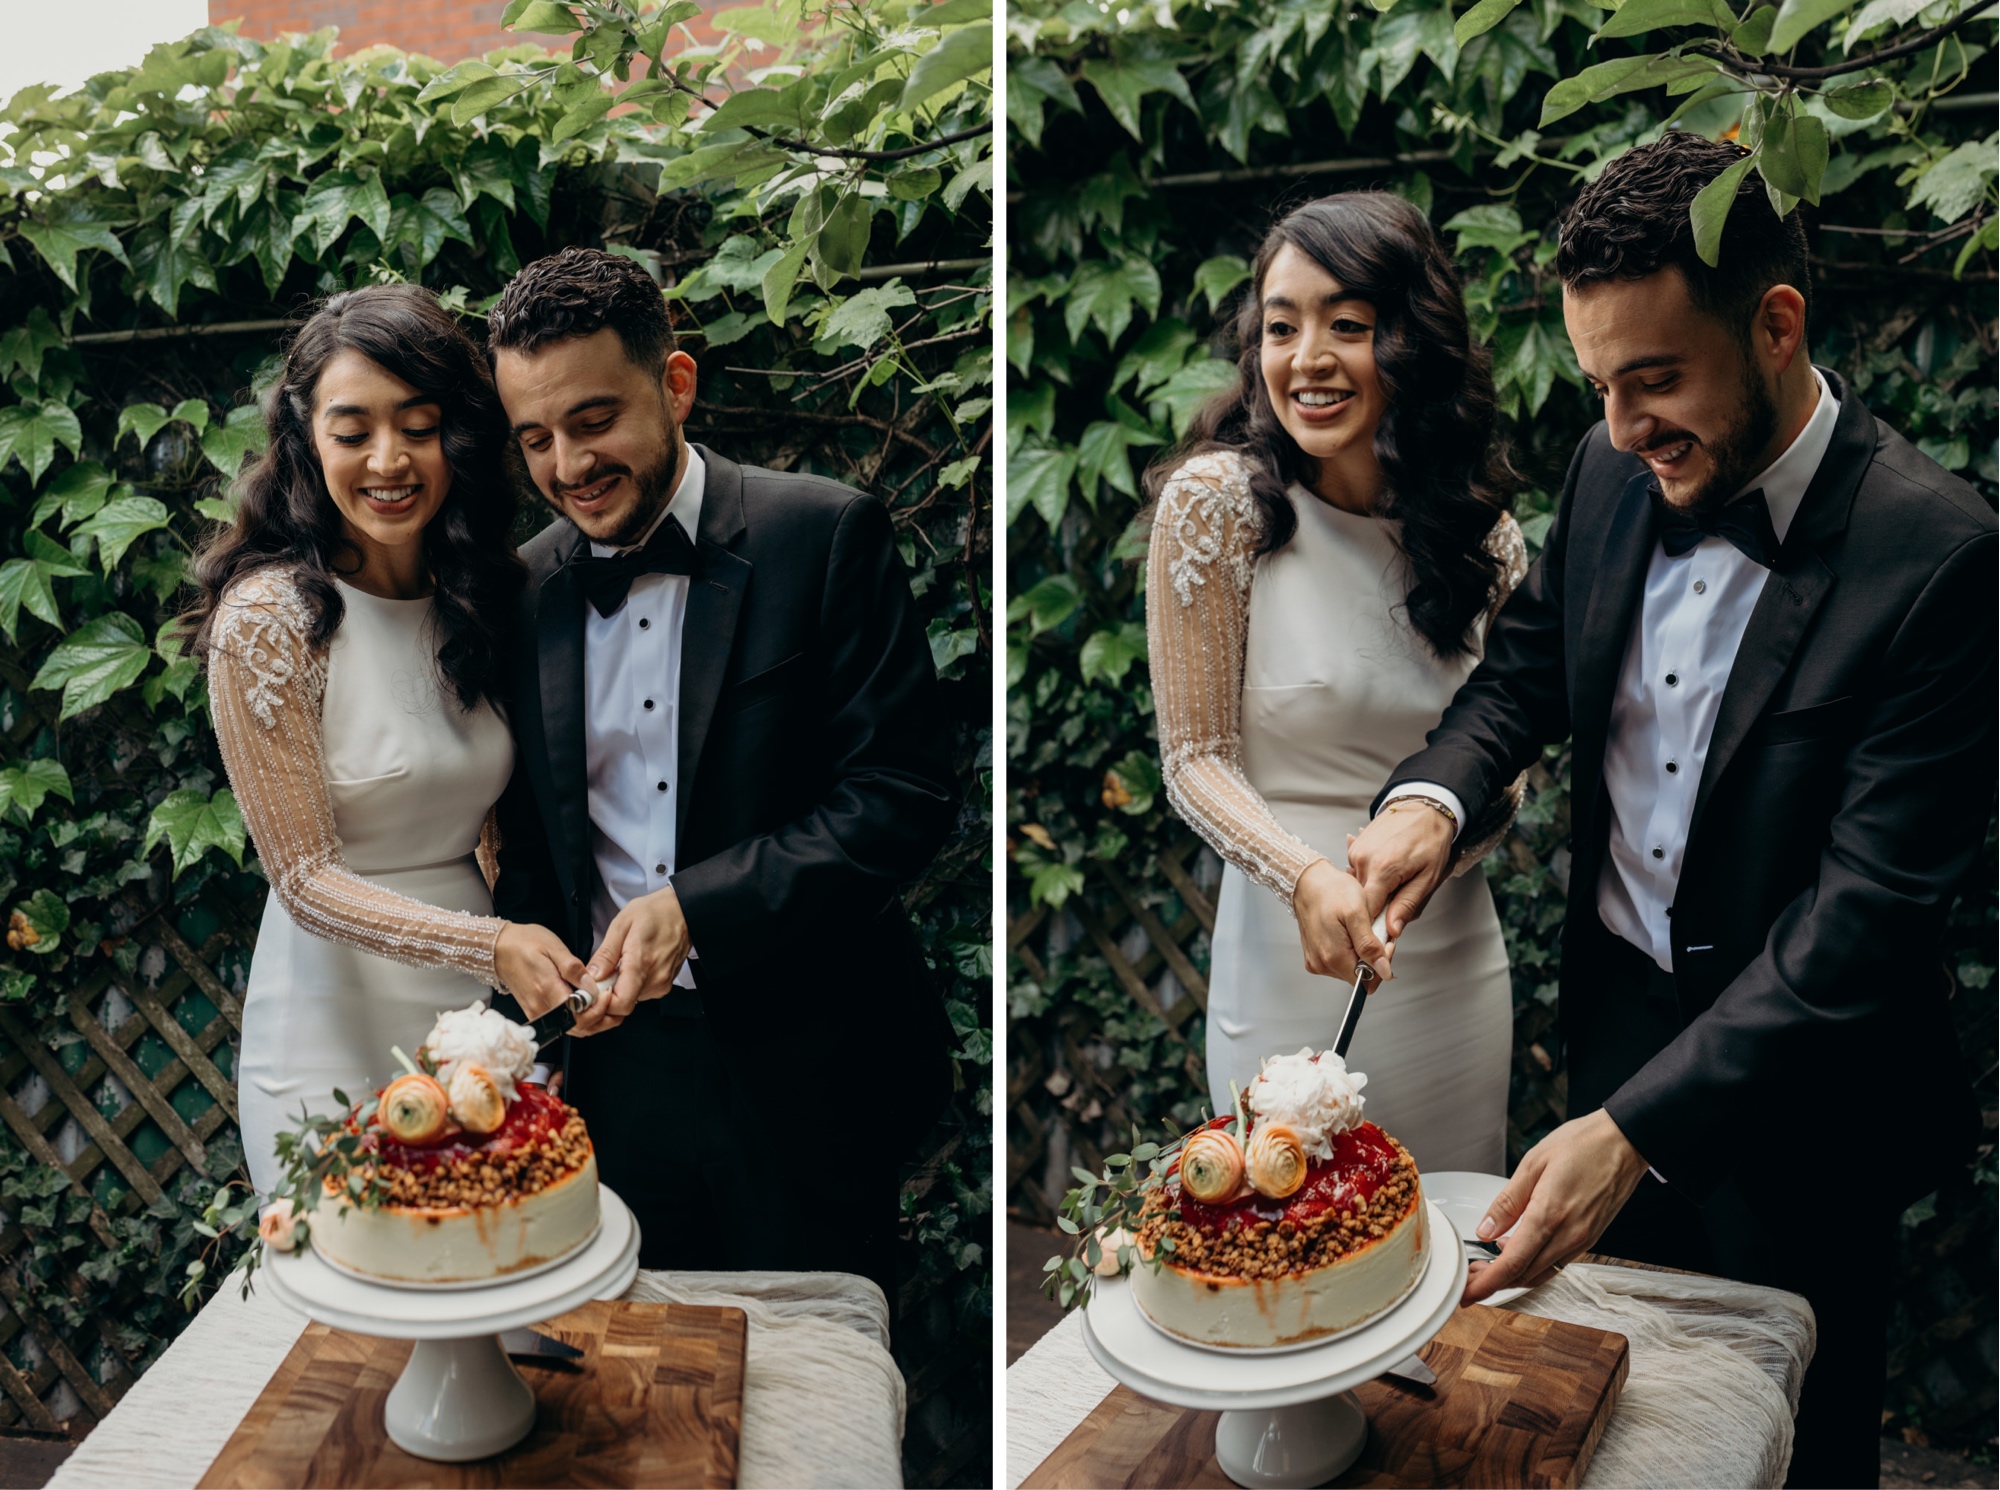 bride and groom cut their wedding cake during their reception at aurora in brooklyn, new york city